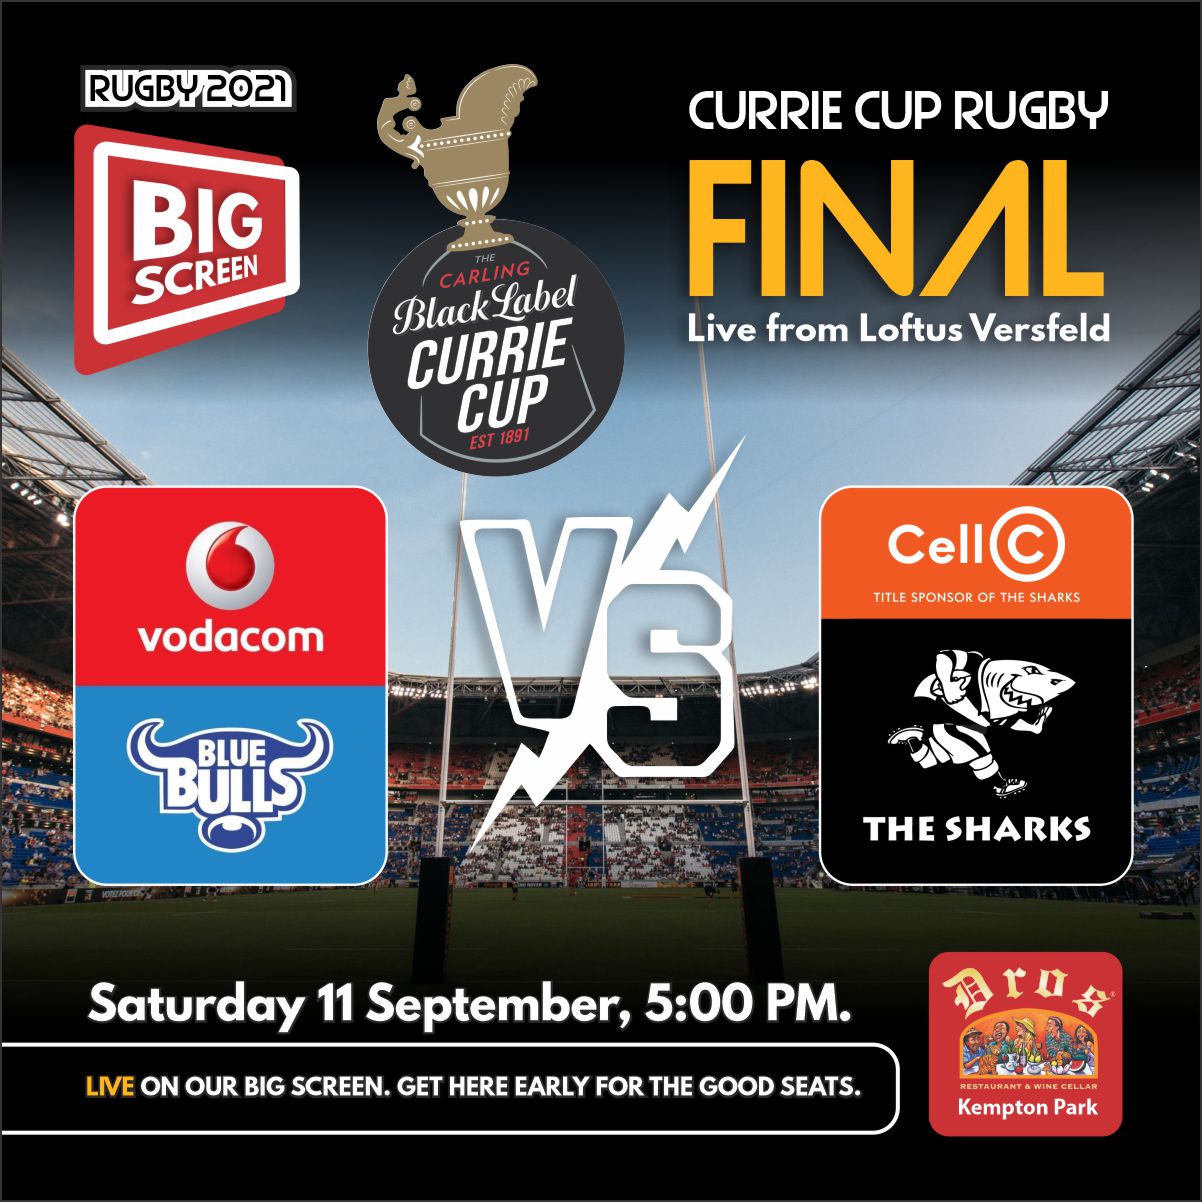 Currie Cup Final Bulls vs Sharks